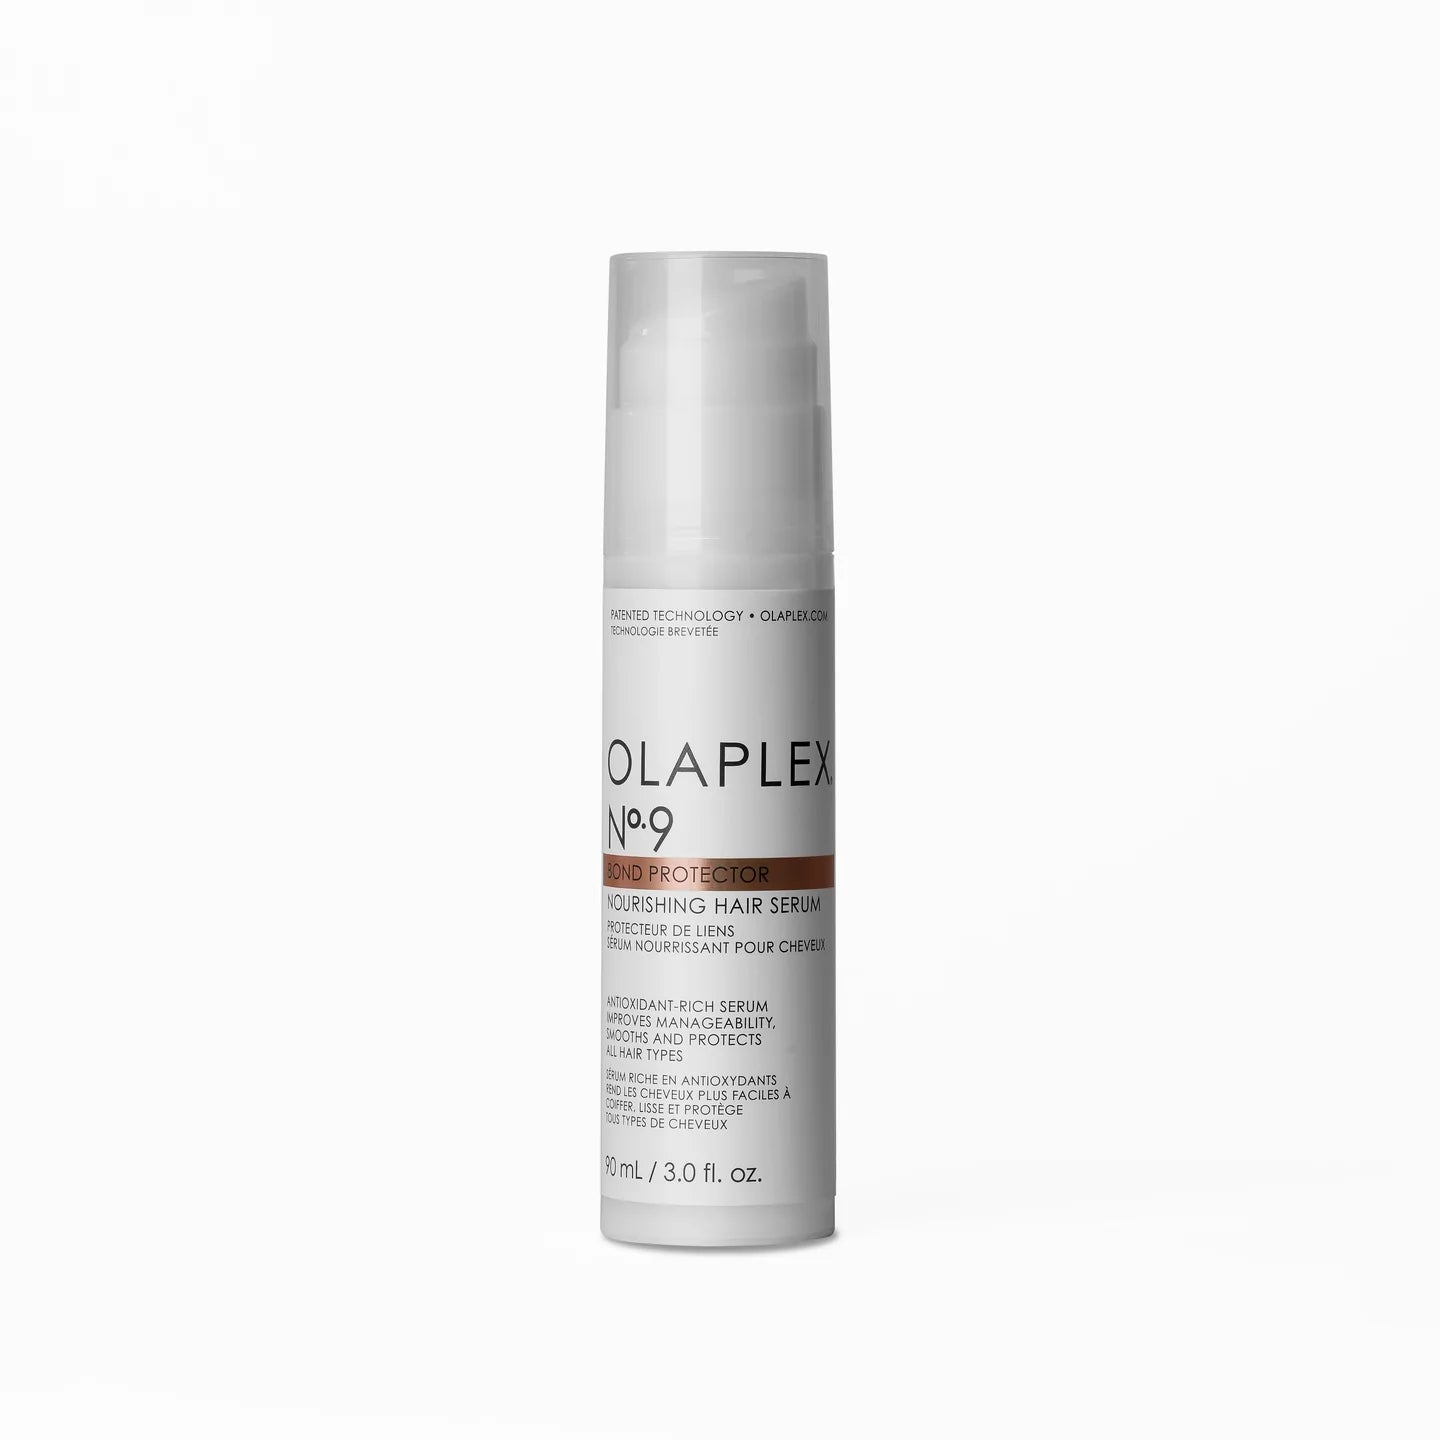 OLAPLEX Nº9 Bond protector nourishing hair serum